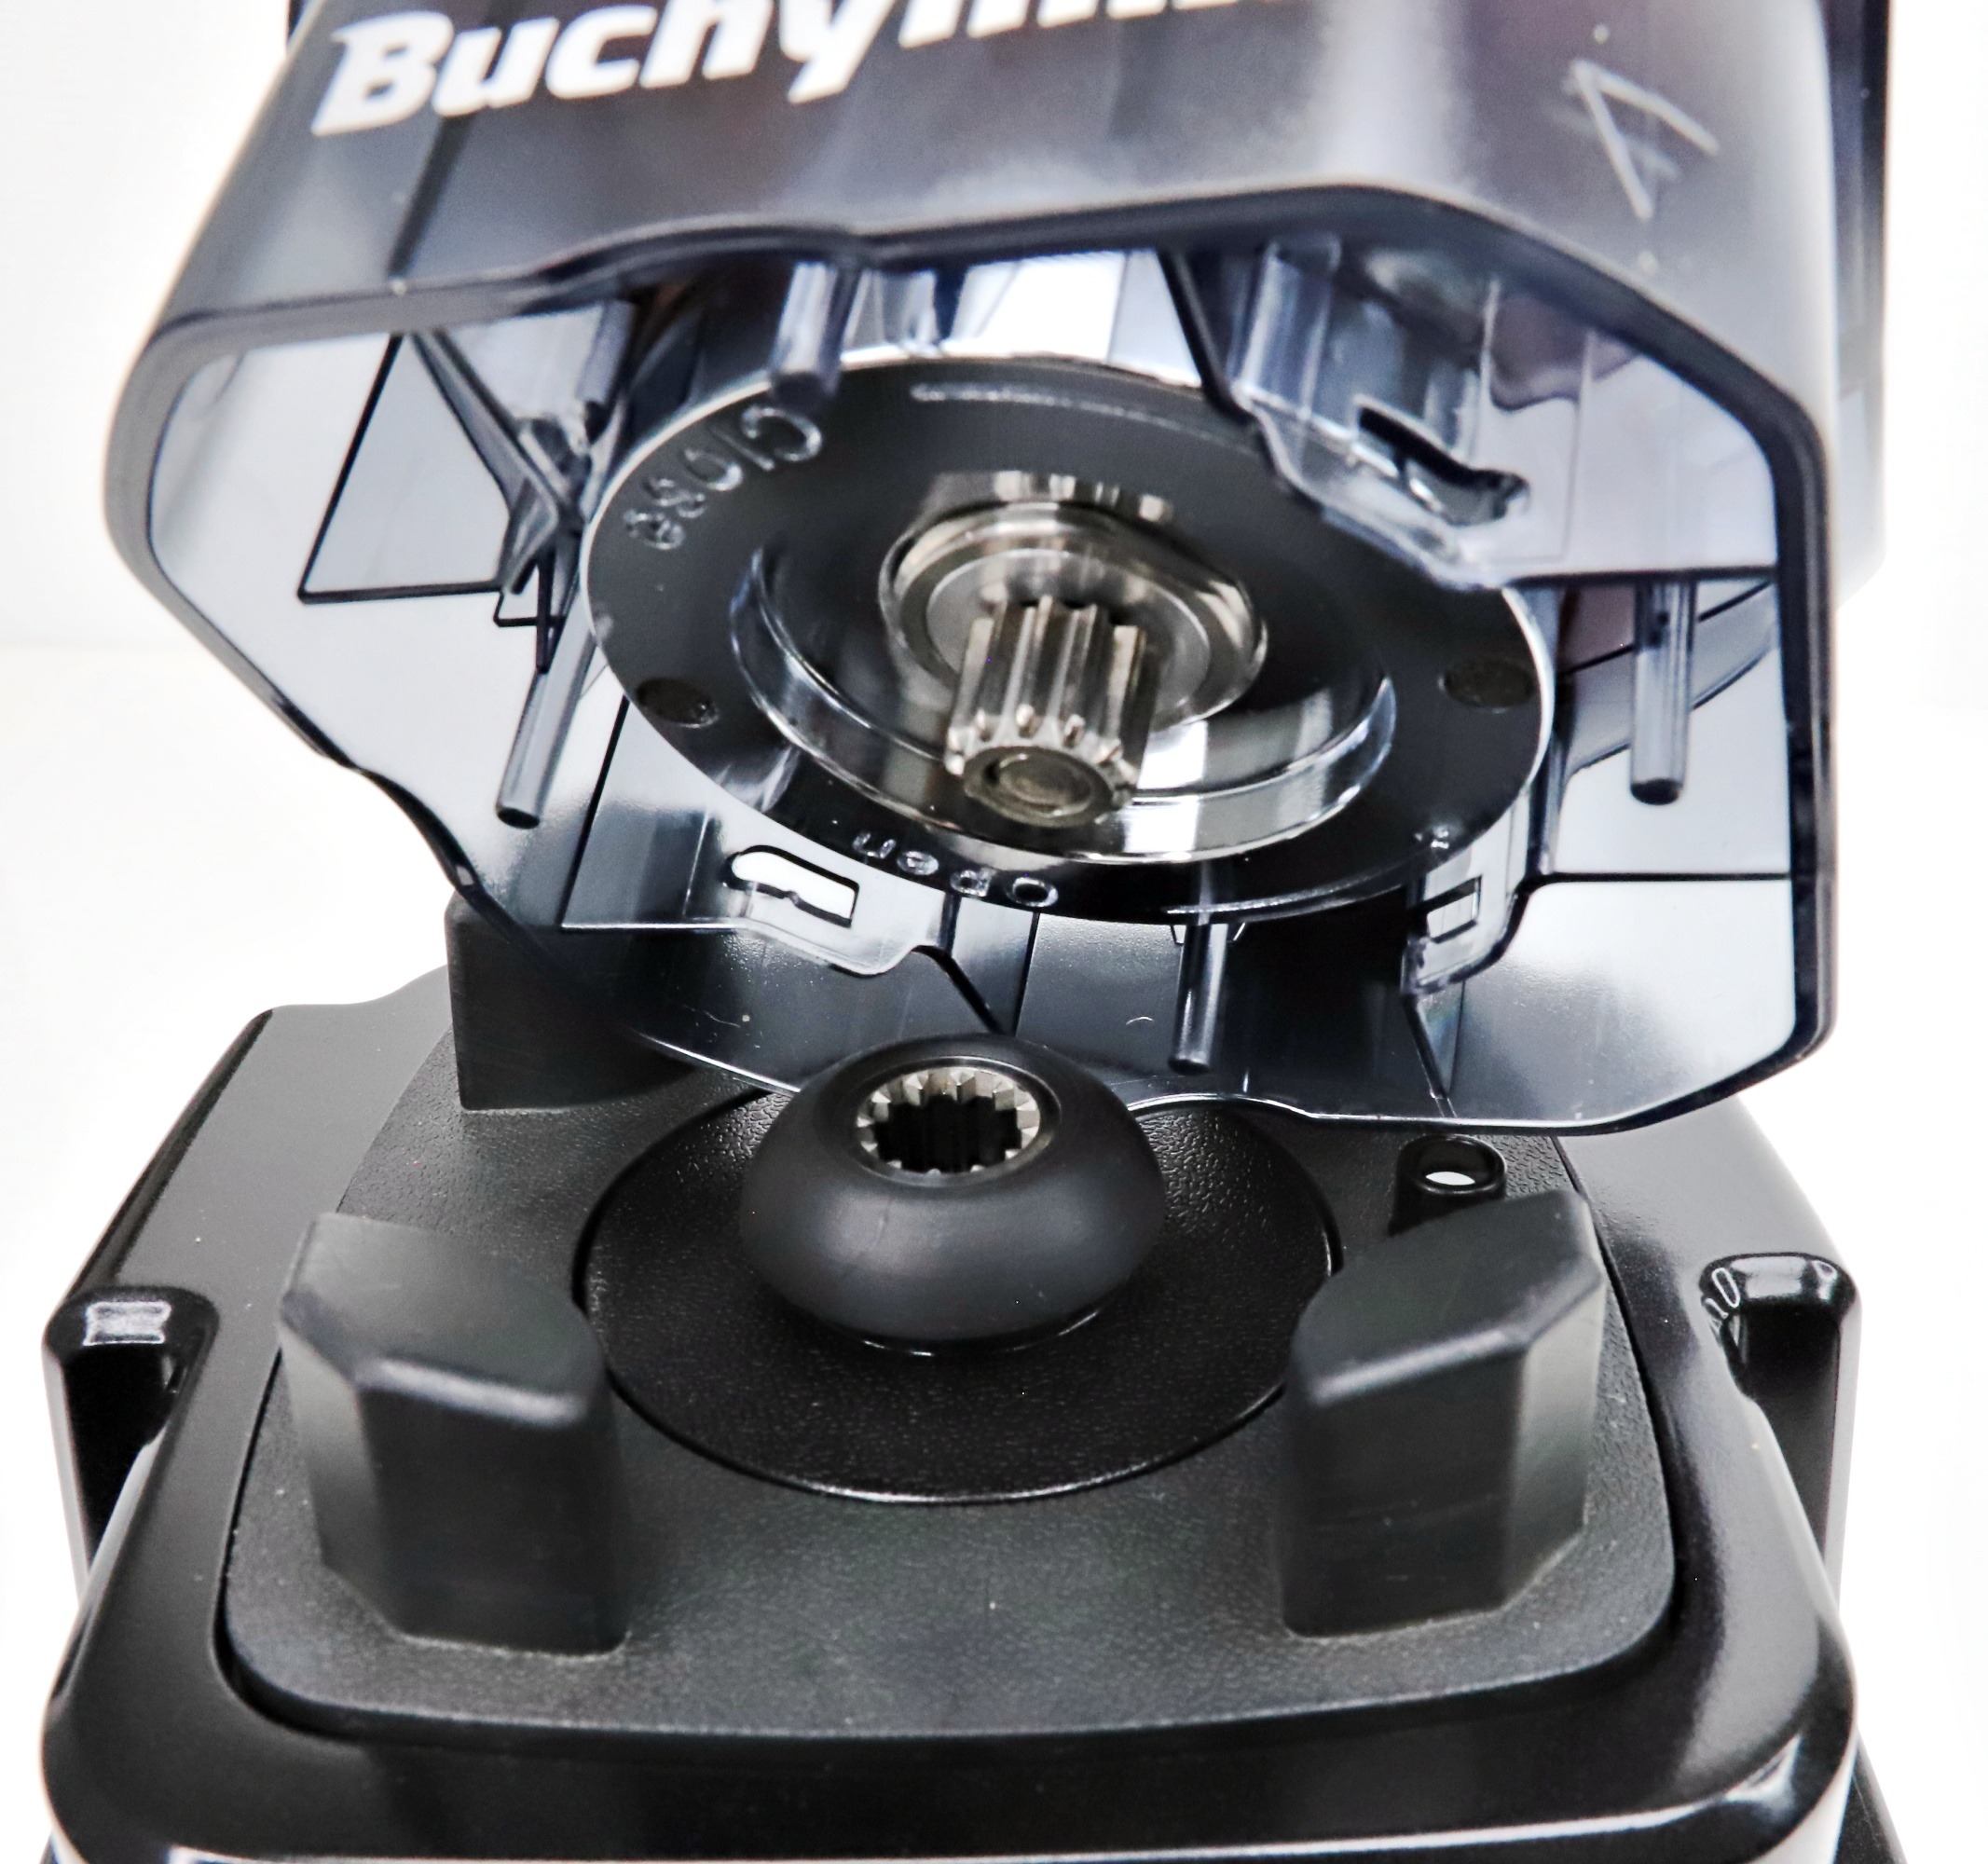 Upgraded Turbocrush Professional Plus Digital Blender BX300- Black